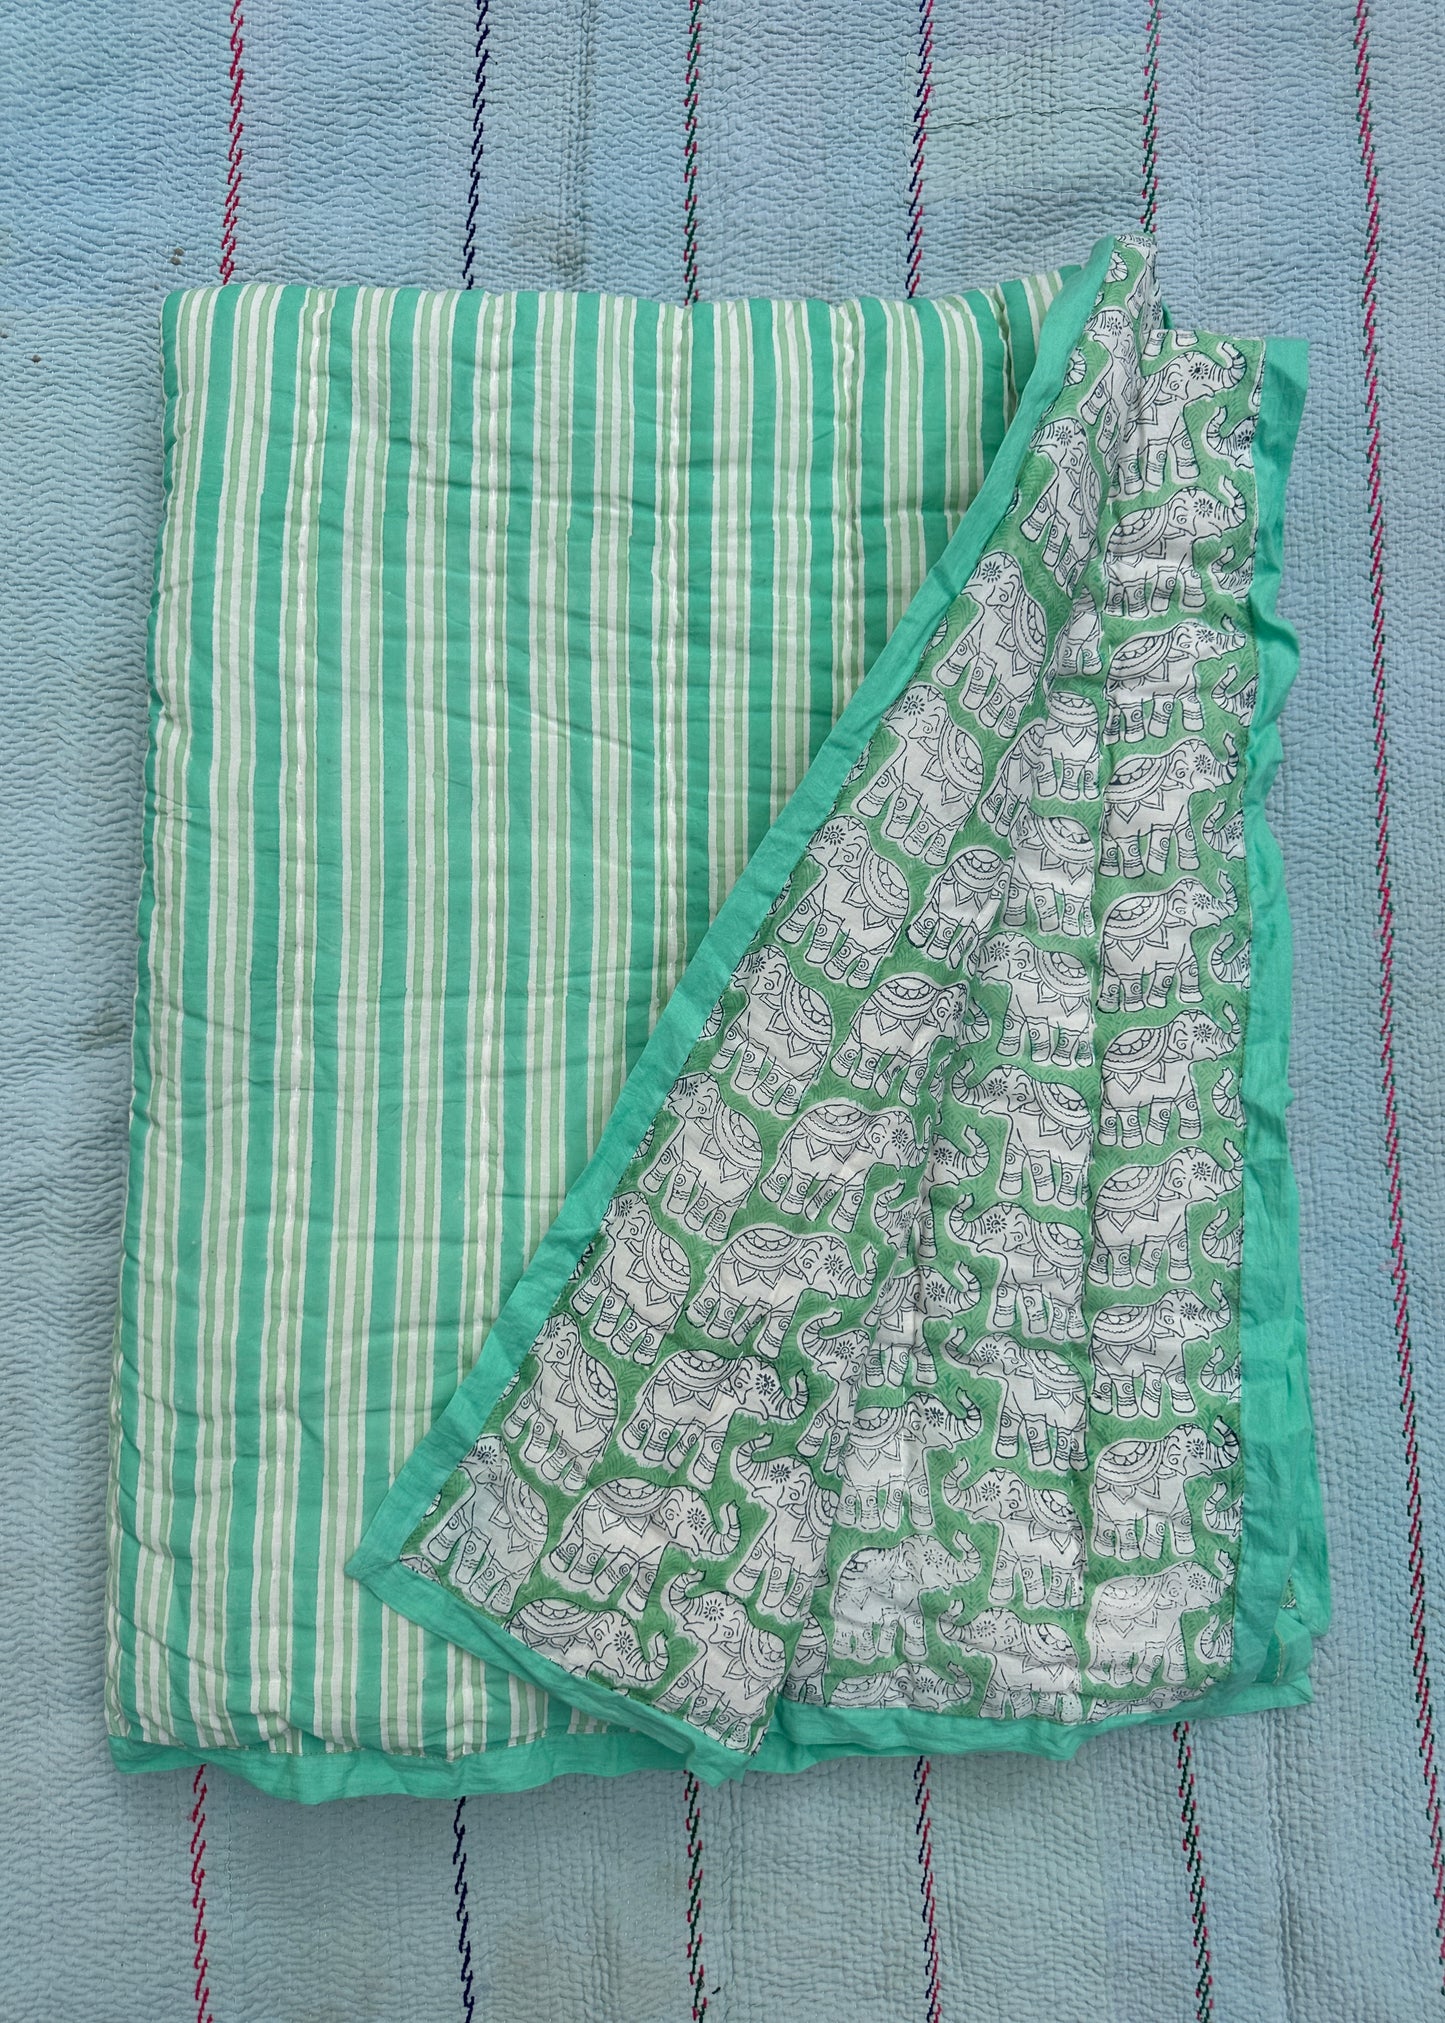 Turquoise Elephant Cot / Single Quilt